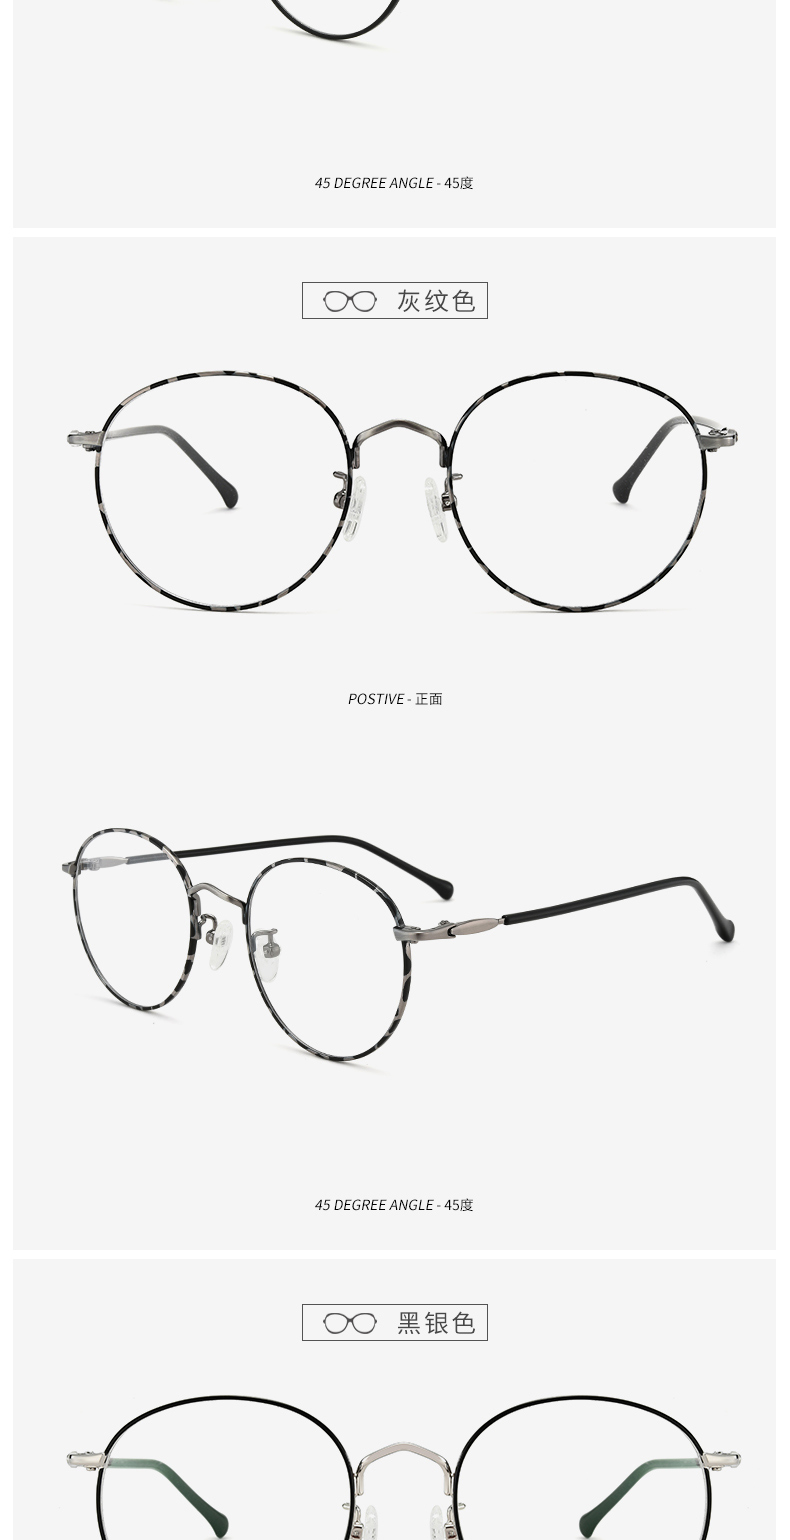 Montures de lunettes PULL BEAR en Alliage cuivre-nickel - Ref 3138528 Image 15